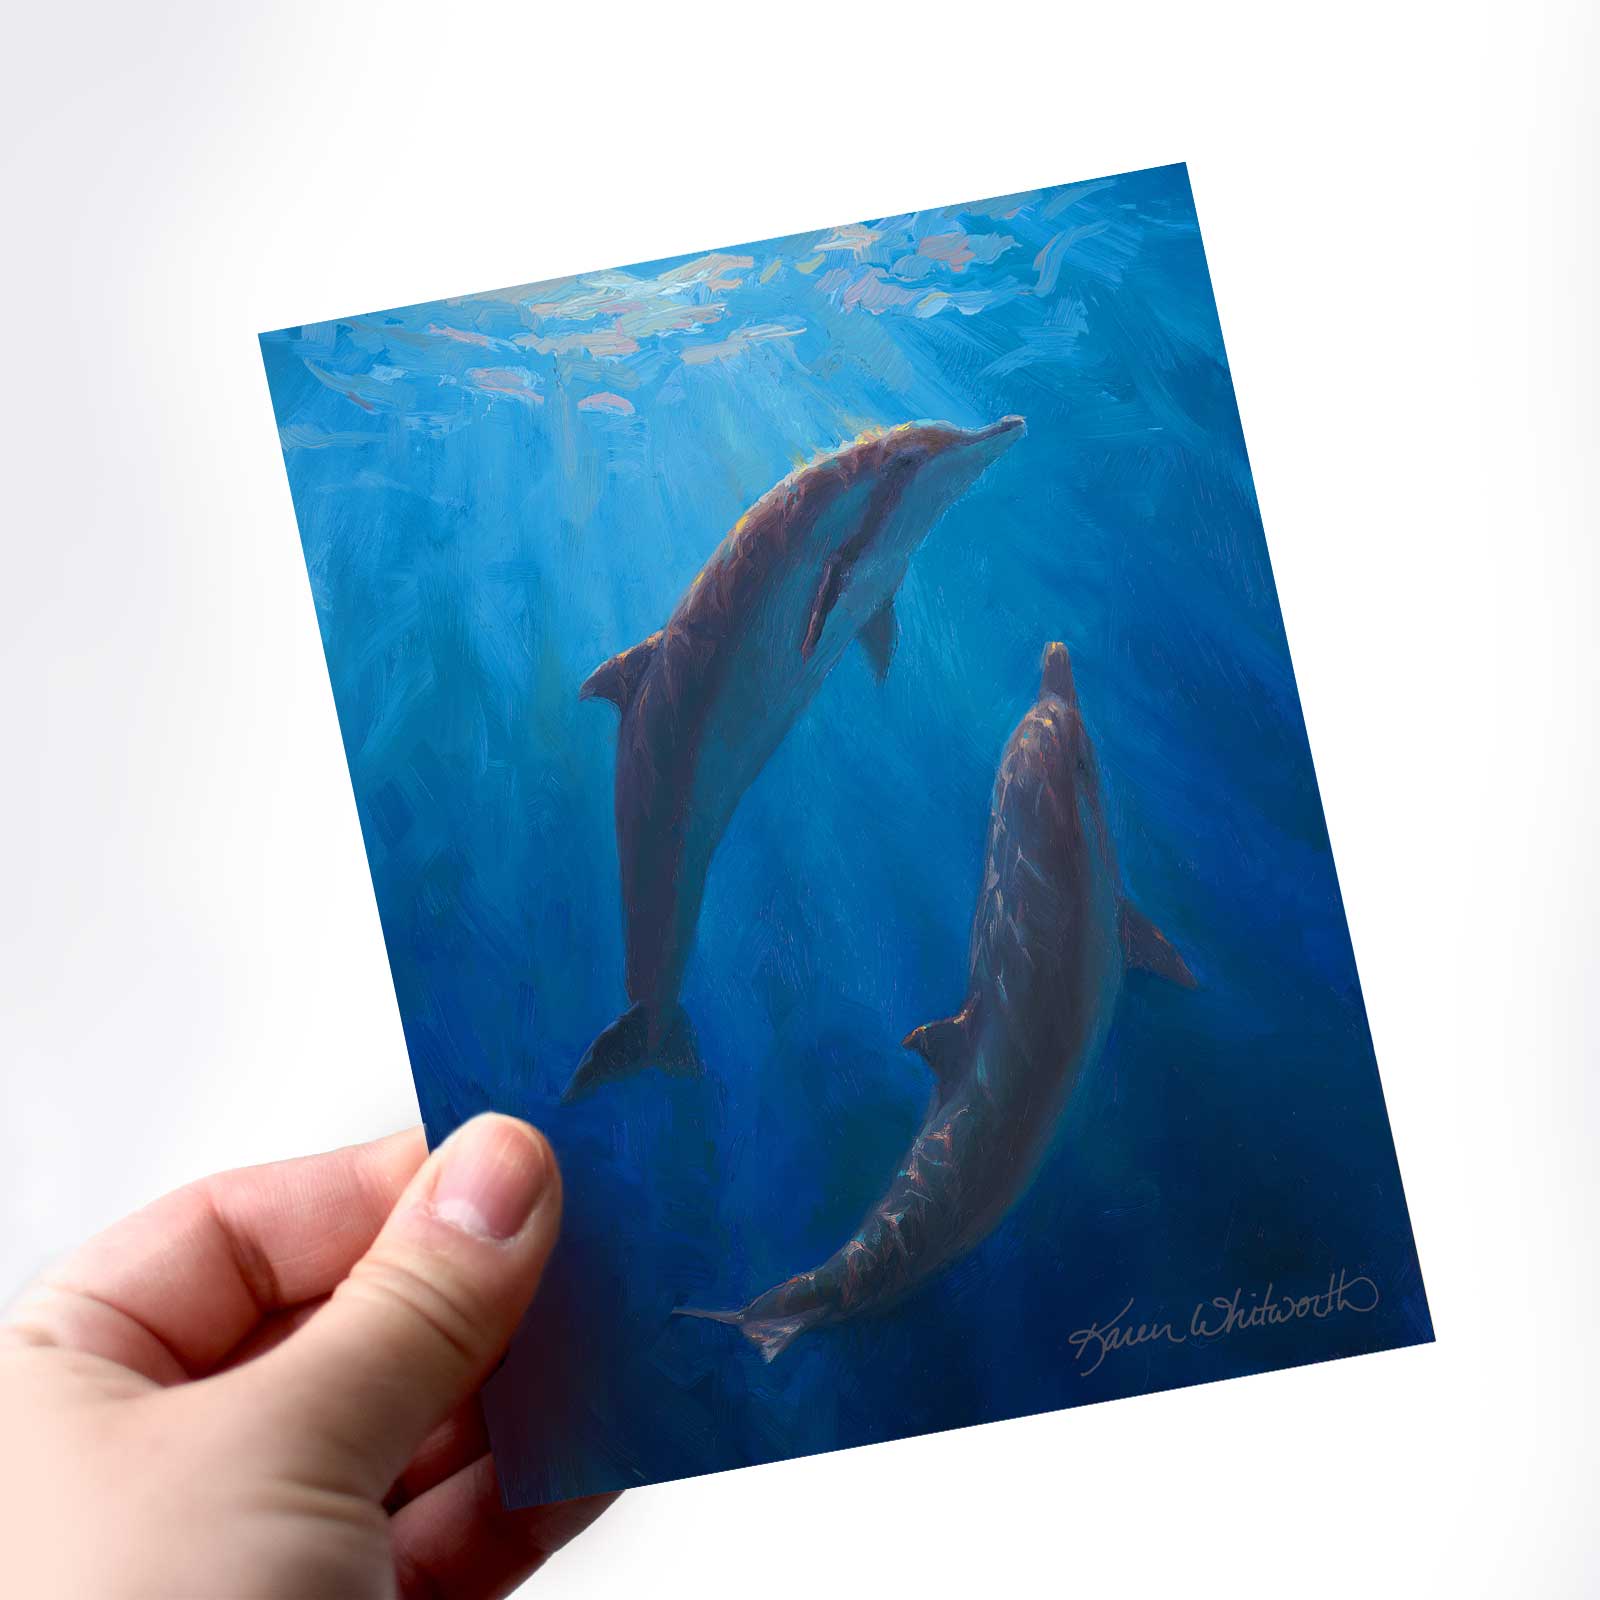 Dolphin Dance greeting card with deep blue ocean colors by Alaska artist Karen Whitworth